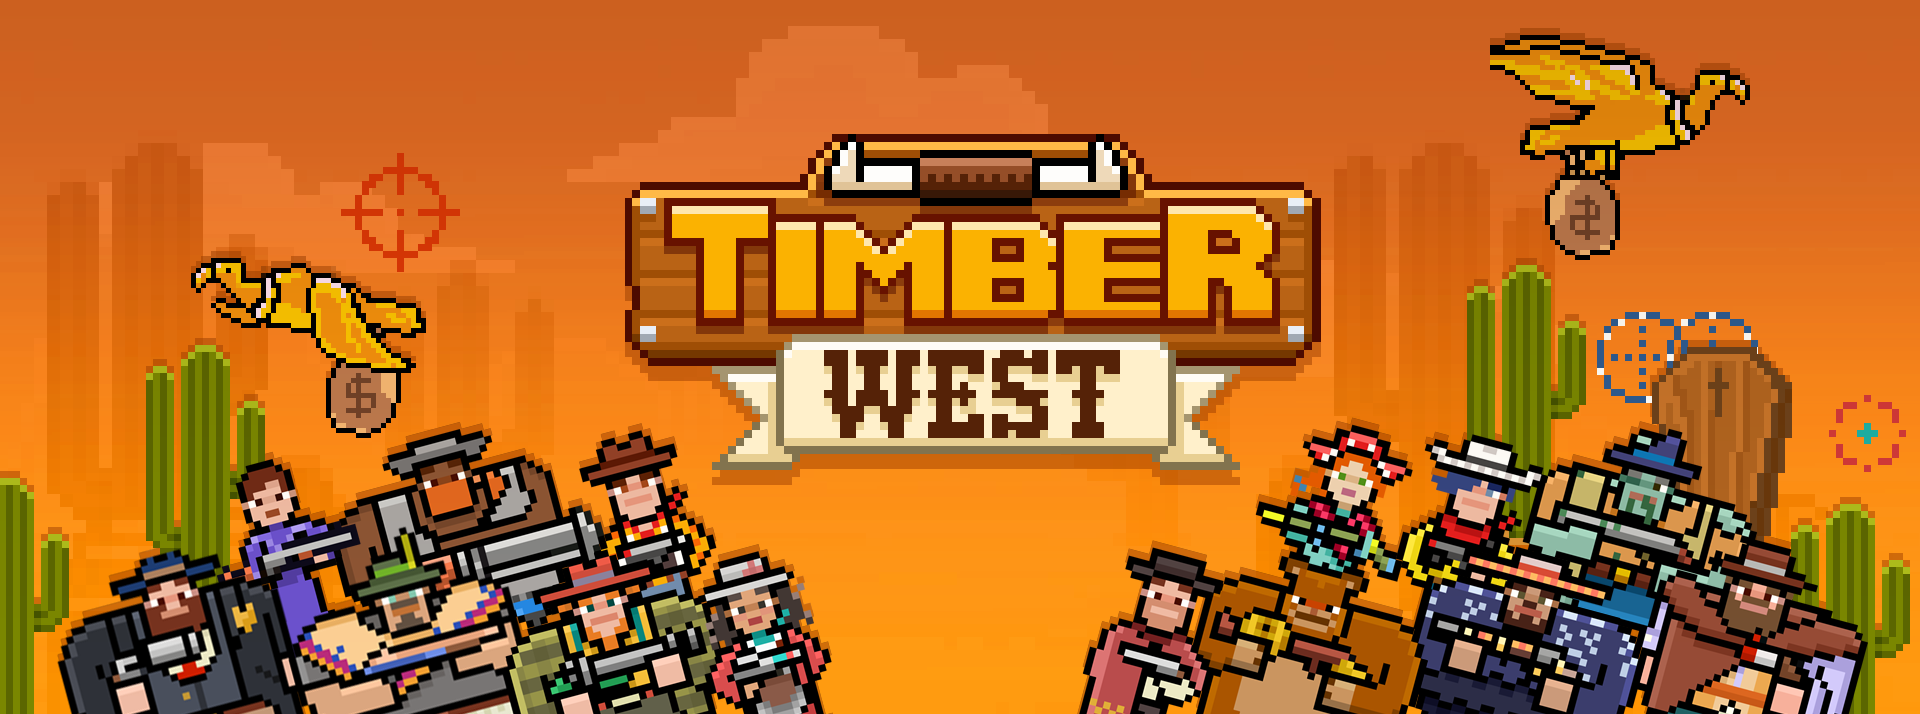 Banner of Timber West - Аркадный шутер на Диком Западе 